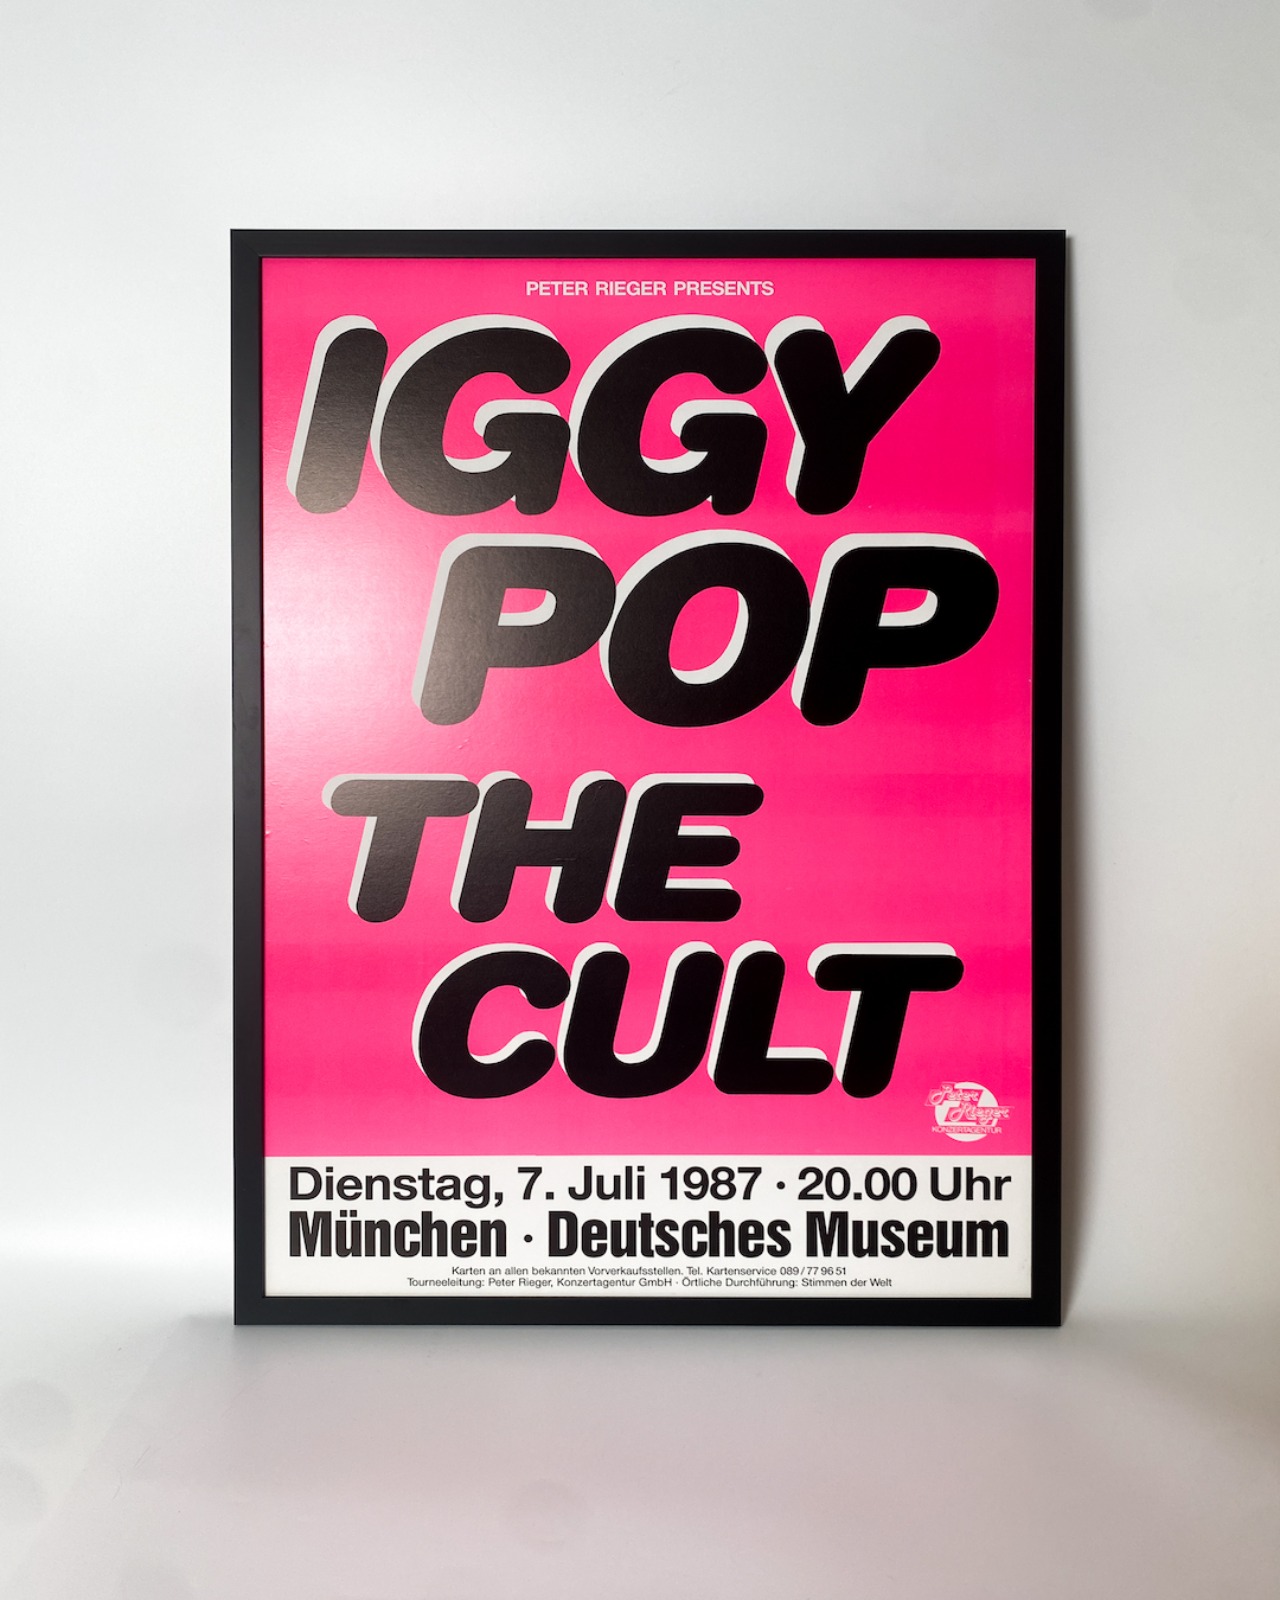 #6916 / Iggy Pop The Cult Concert